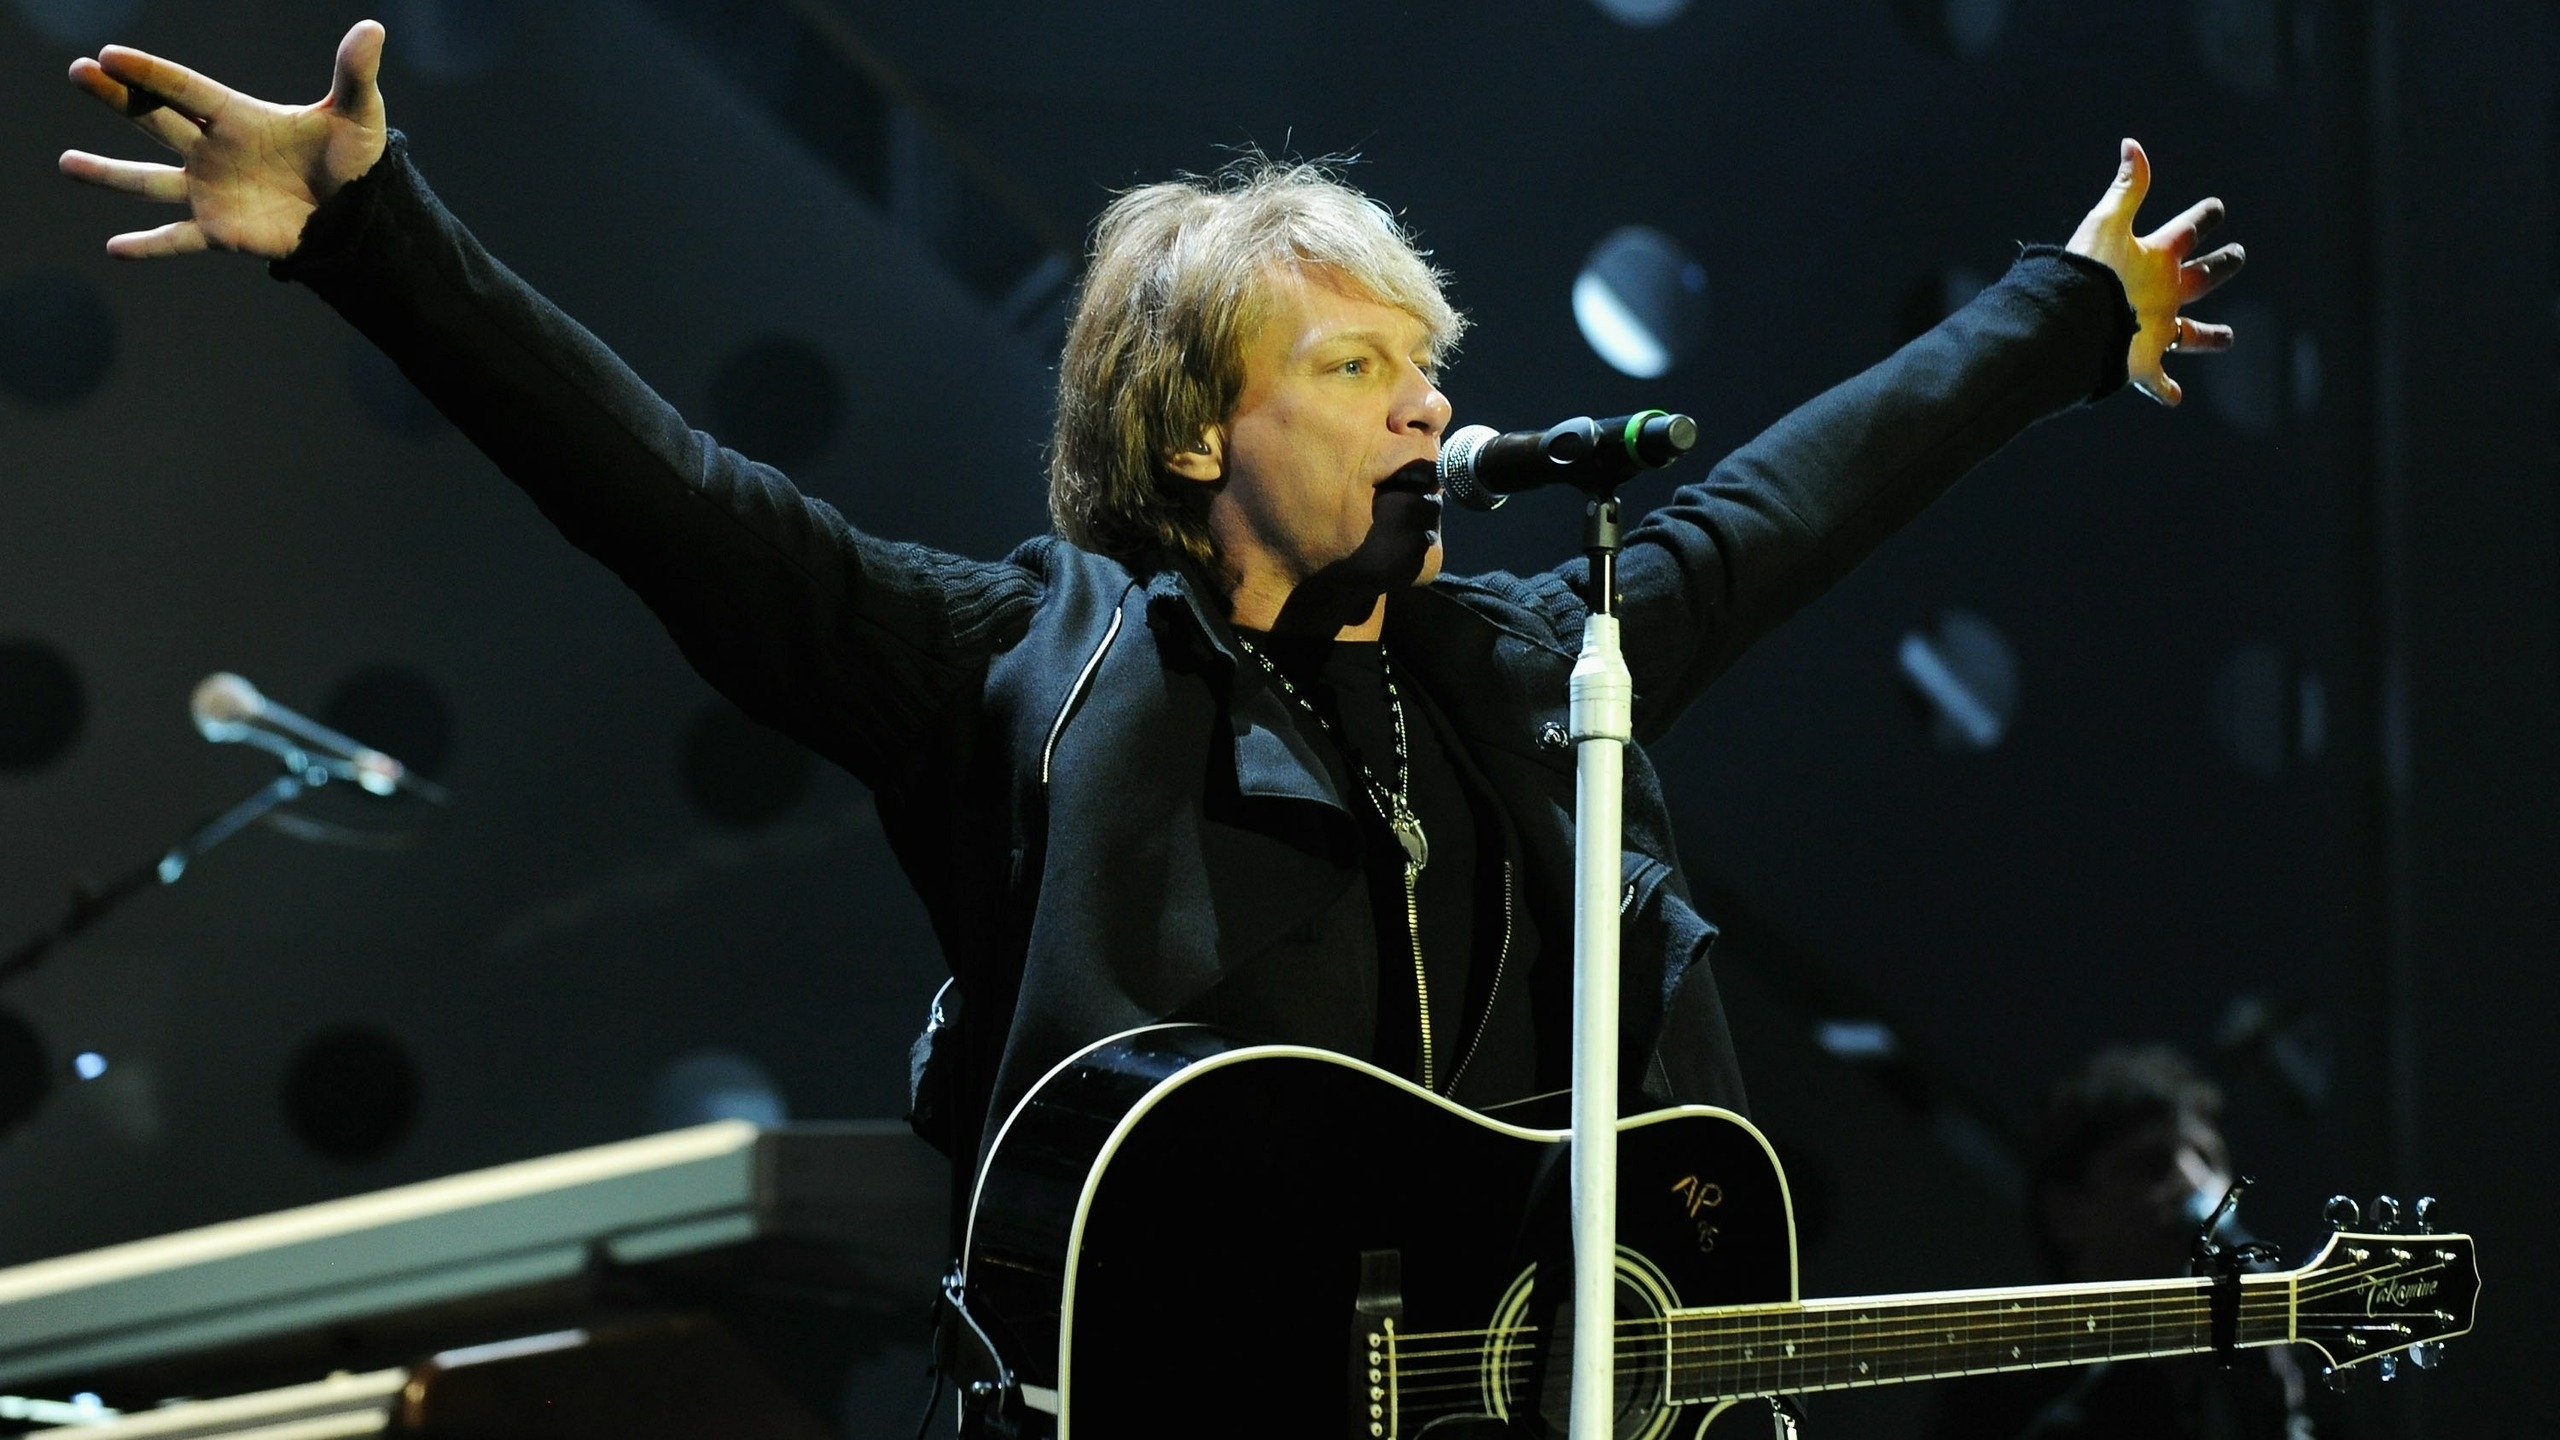 Bon Jovi Live Concert for 2560x1440 HDTV resolution